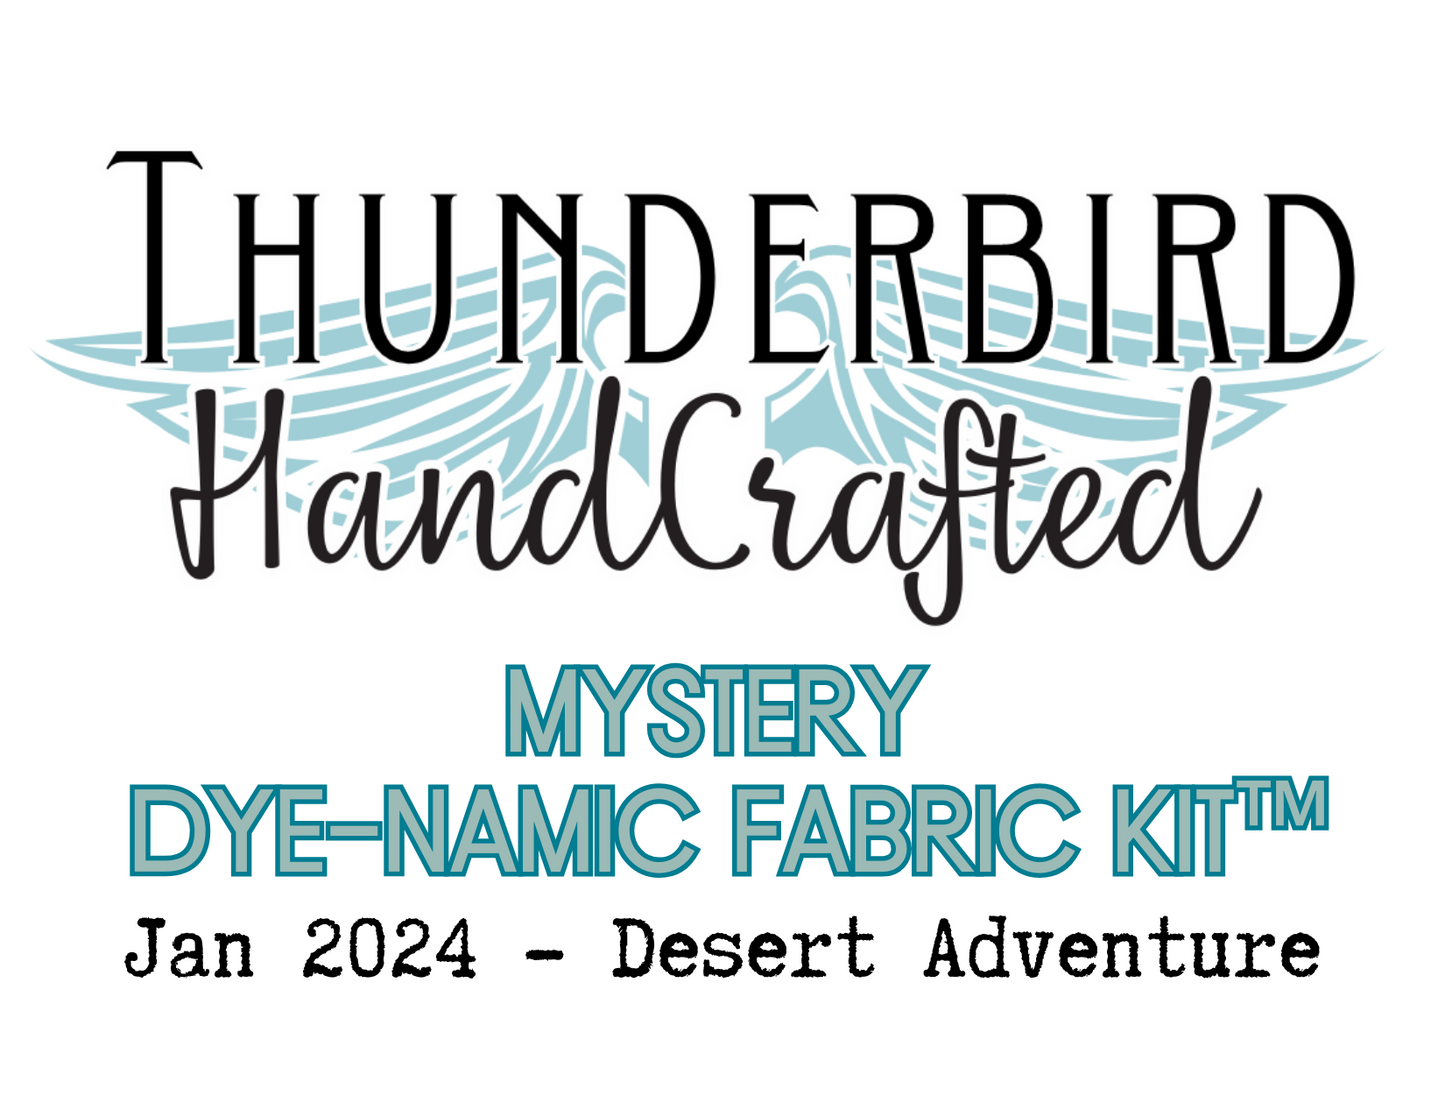 January 2024 Dye-Namic Fabric Kit™ - Desert Adventure